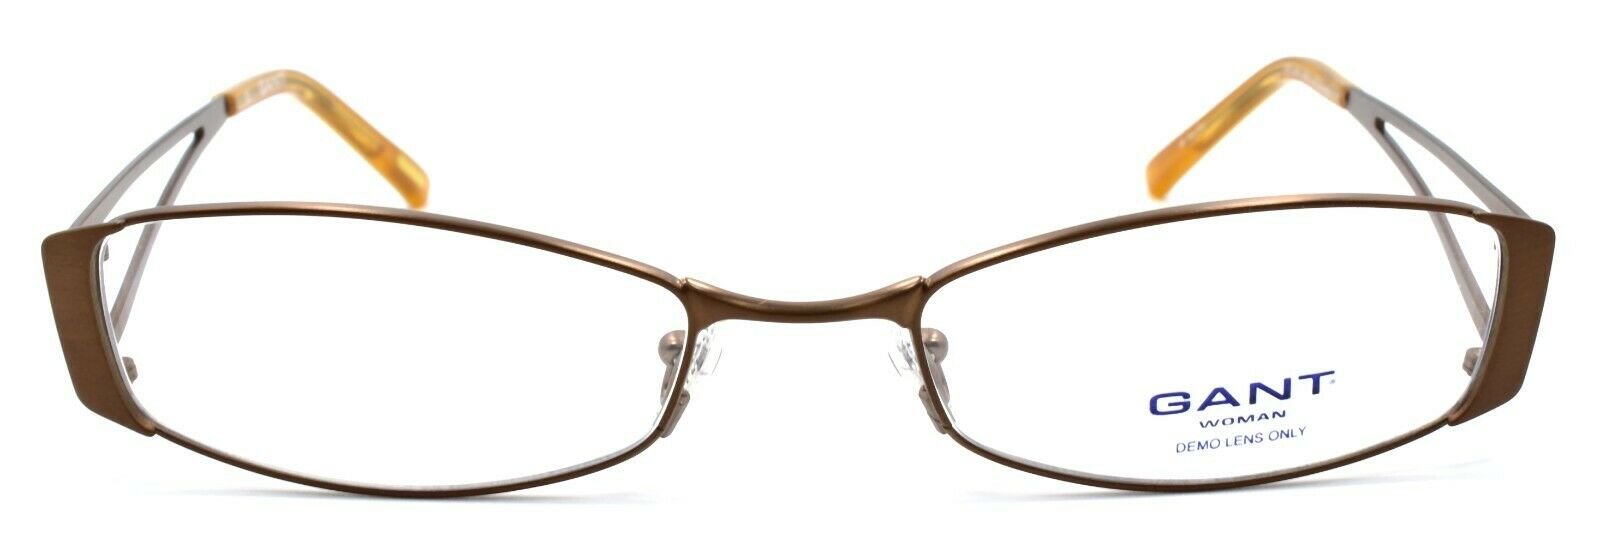 2-GANT GW Jani BRN Women's Eyeglasses Frames 51-18-135 Brown-715583045095-IKSpecs